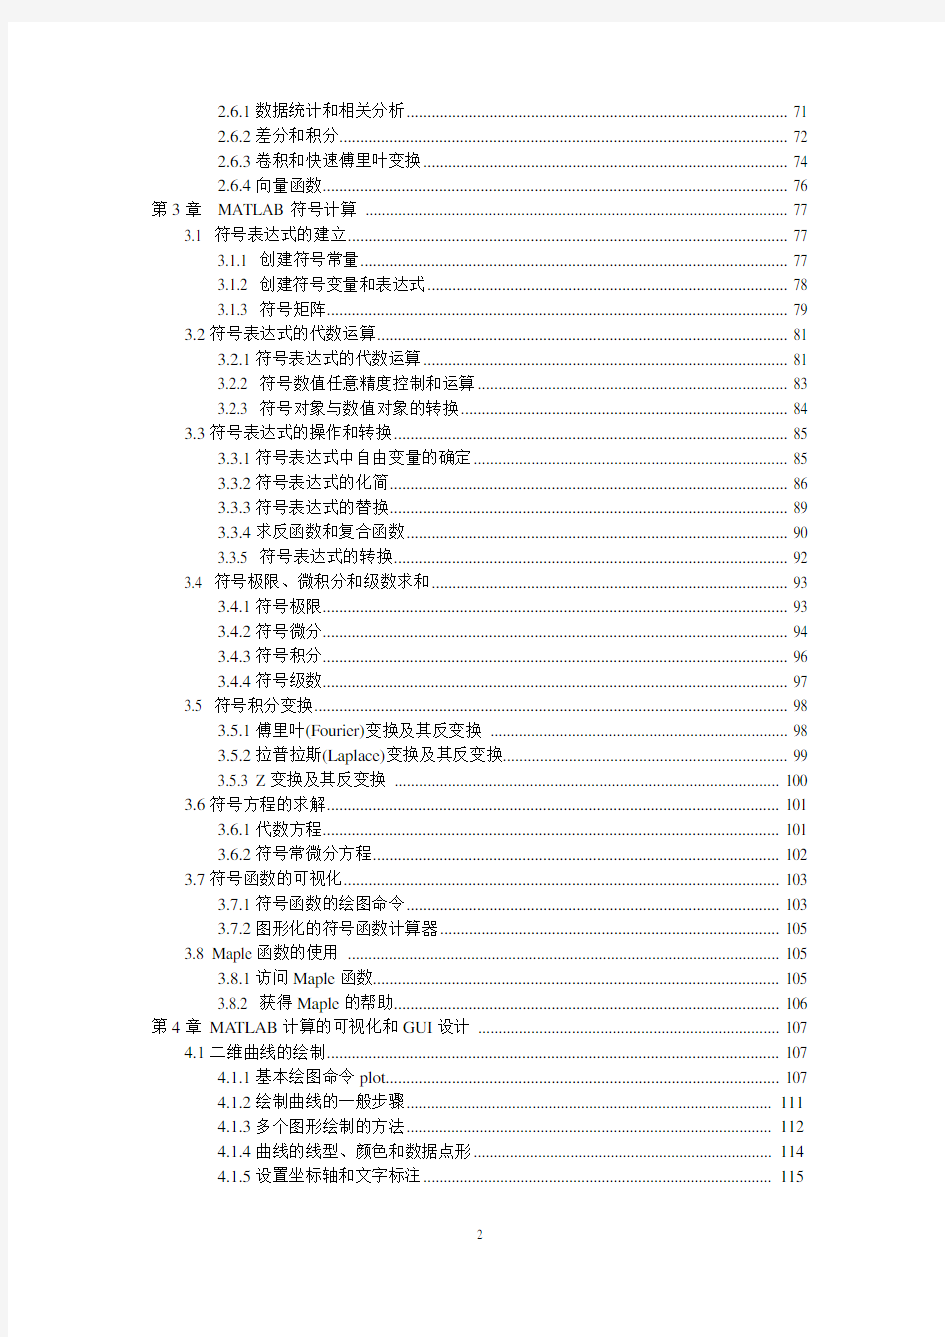 MATLAB中文手册